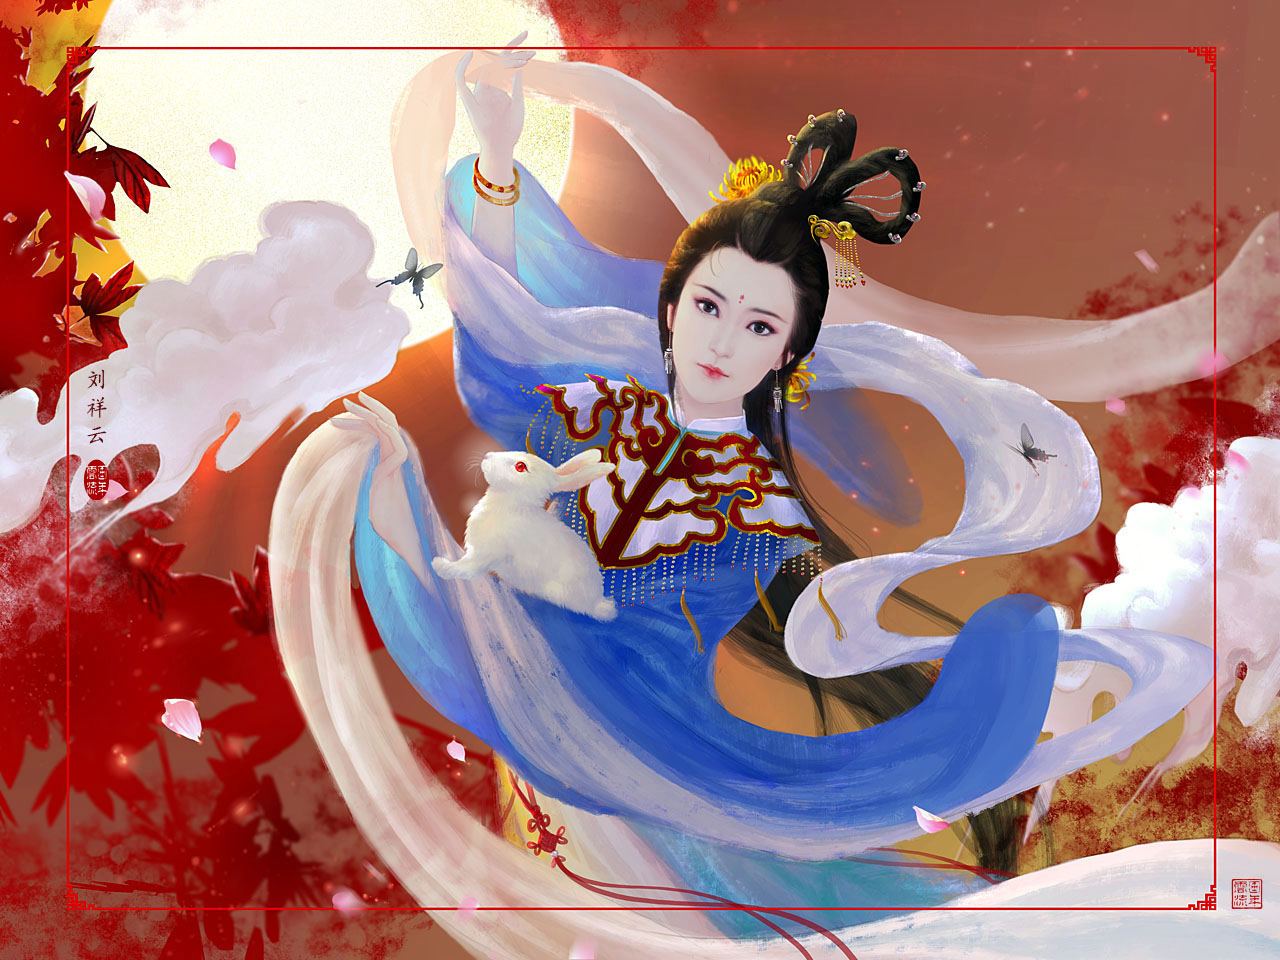 General 1280x960 digital art original characters fantasy girl hiLiuyun